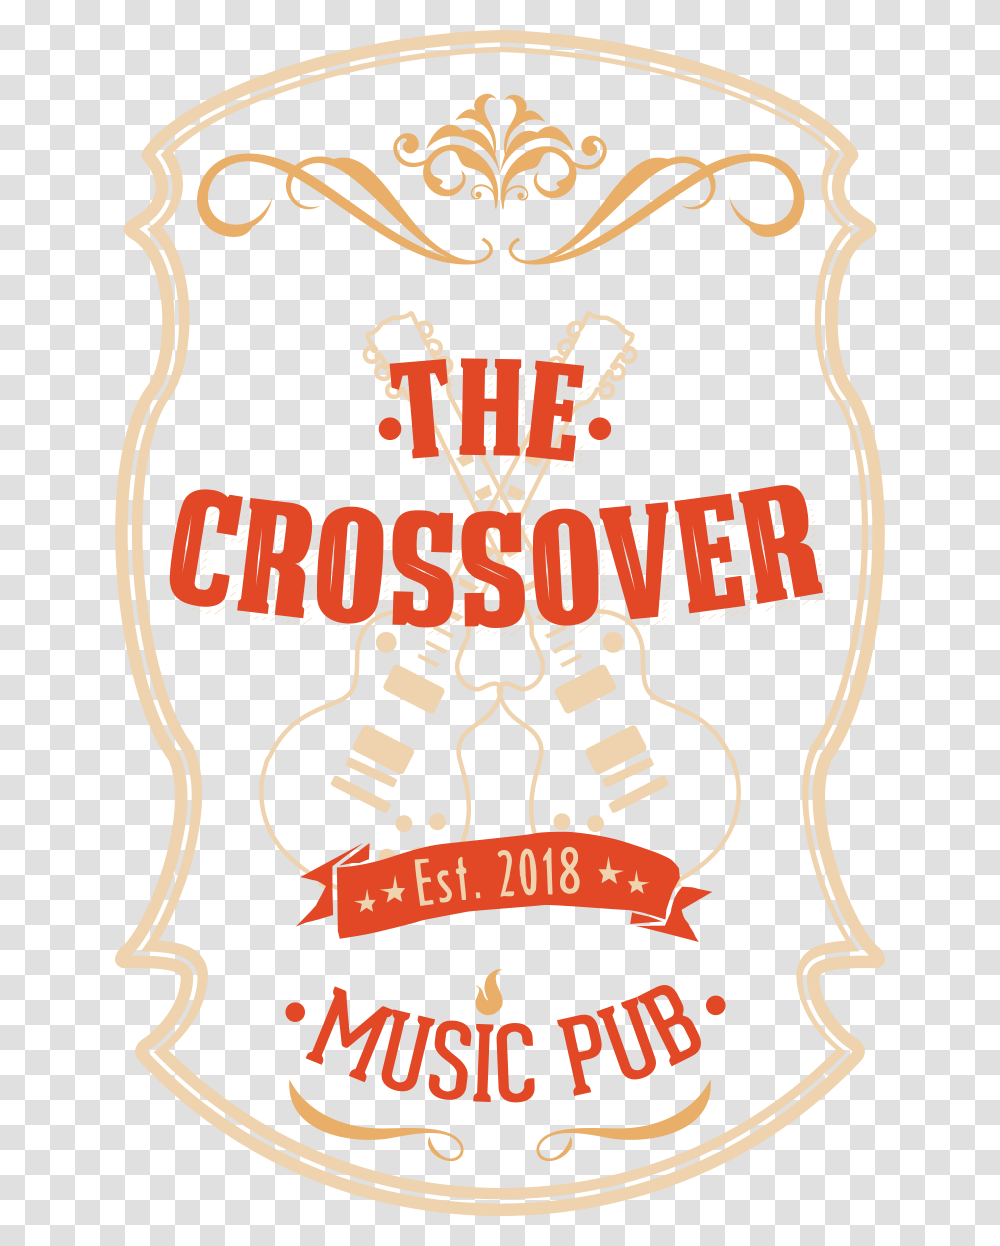 Randy Hansen Live The Crossover Music Pub Illustration, Poster, Advertisement, Flyer, Paper Transparent Png